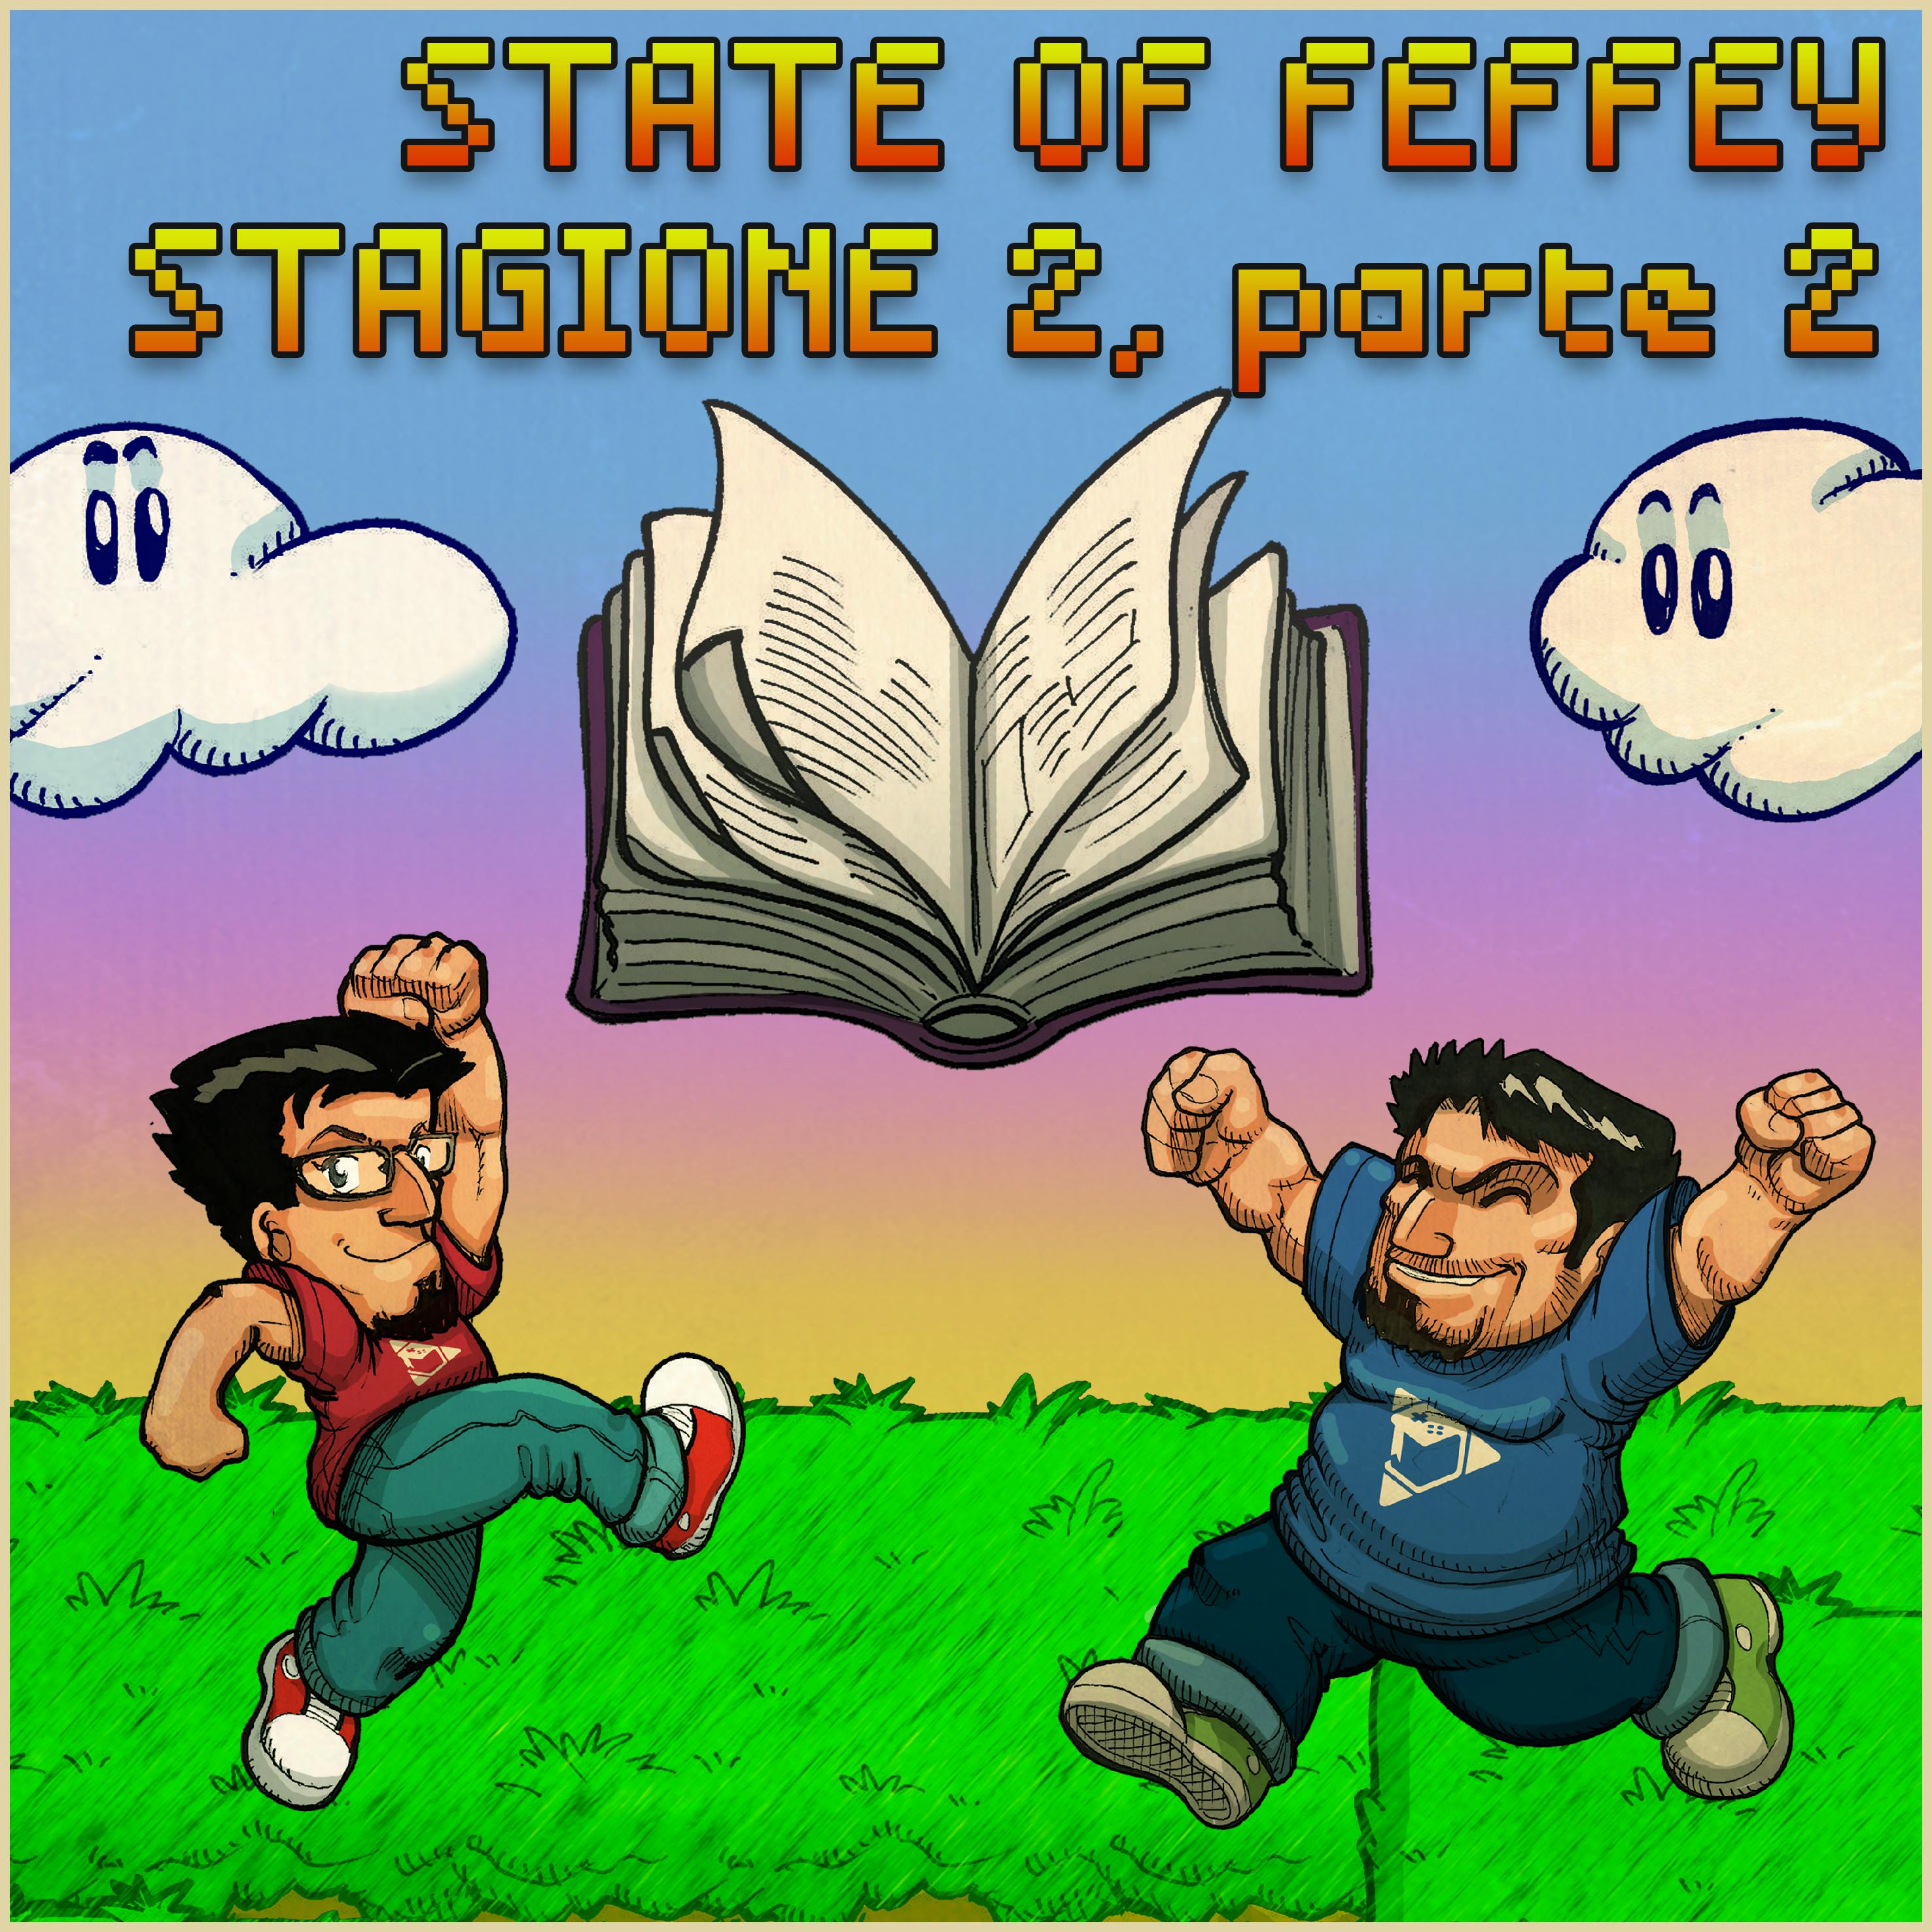 State of Feffey: Stagione 2, parte 2